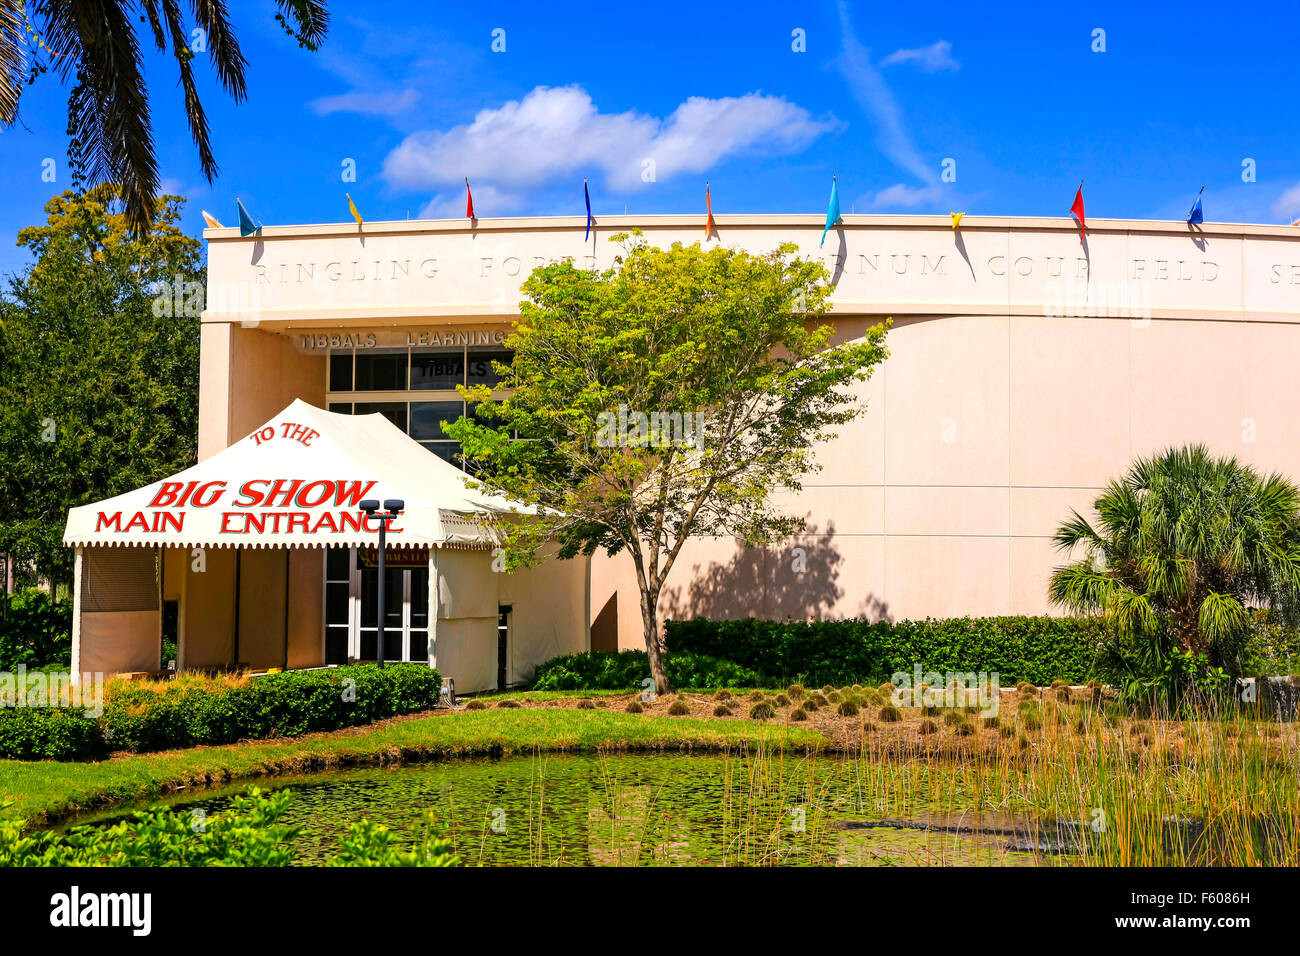 Big Show Main Entrance at the Ringling Circus Museum in Sarasota Florida Stock Photo